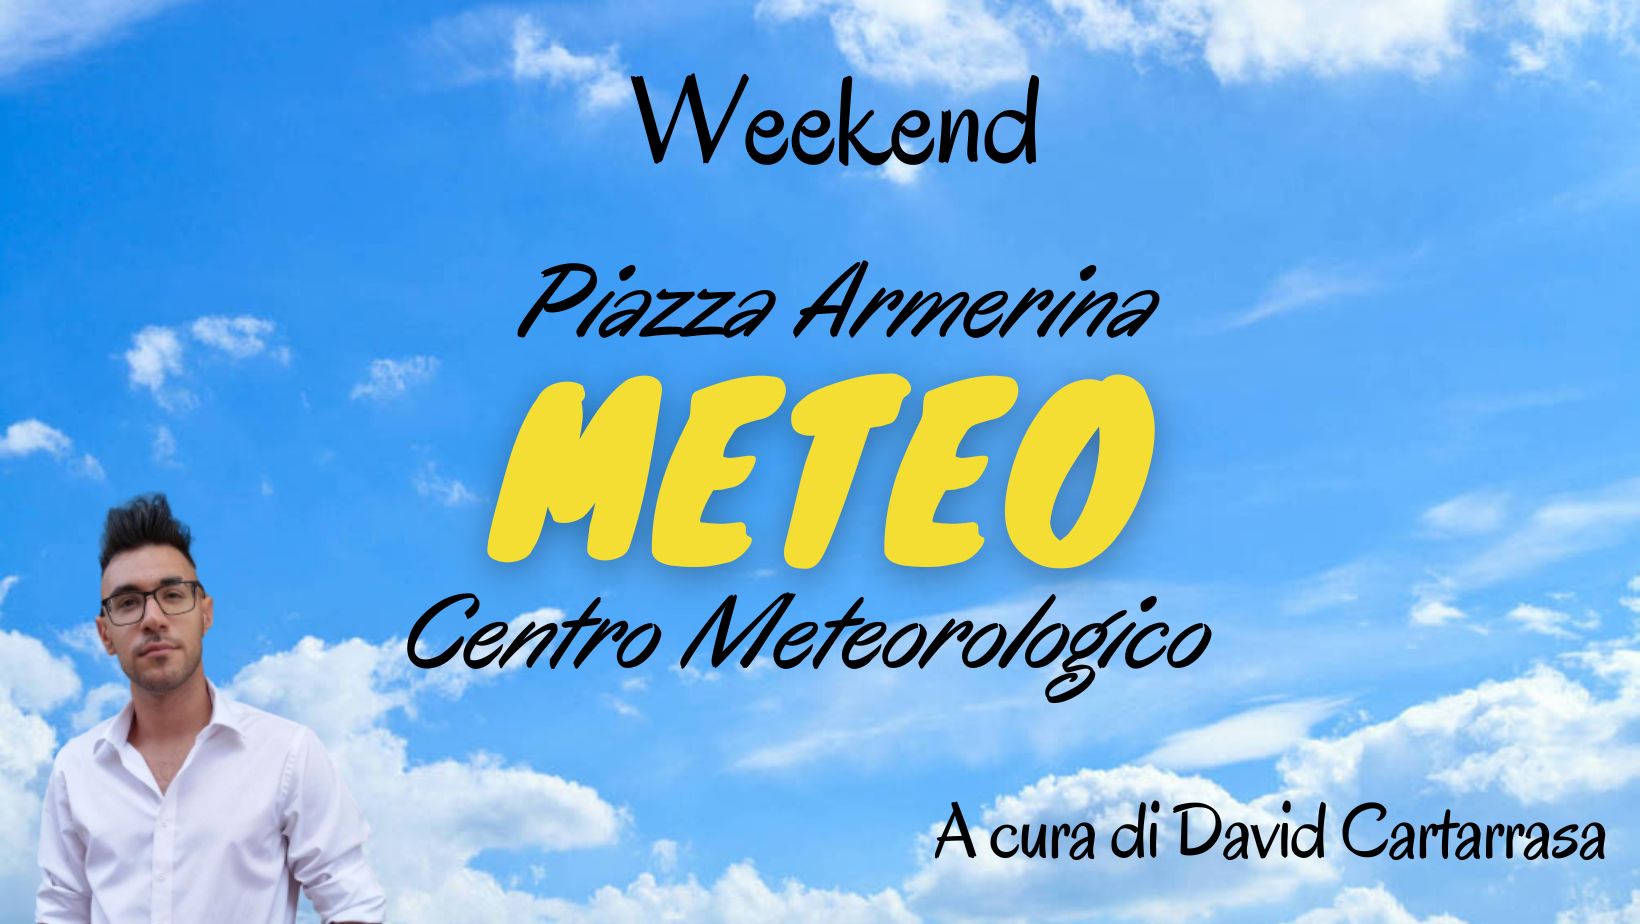 Meteo Piazza Armerina: weekend mite e nuvoloso